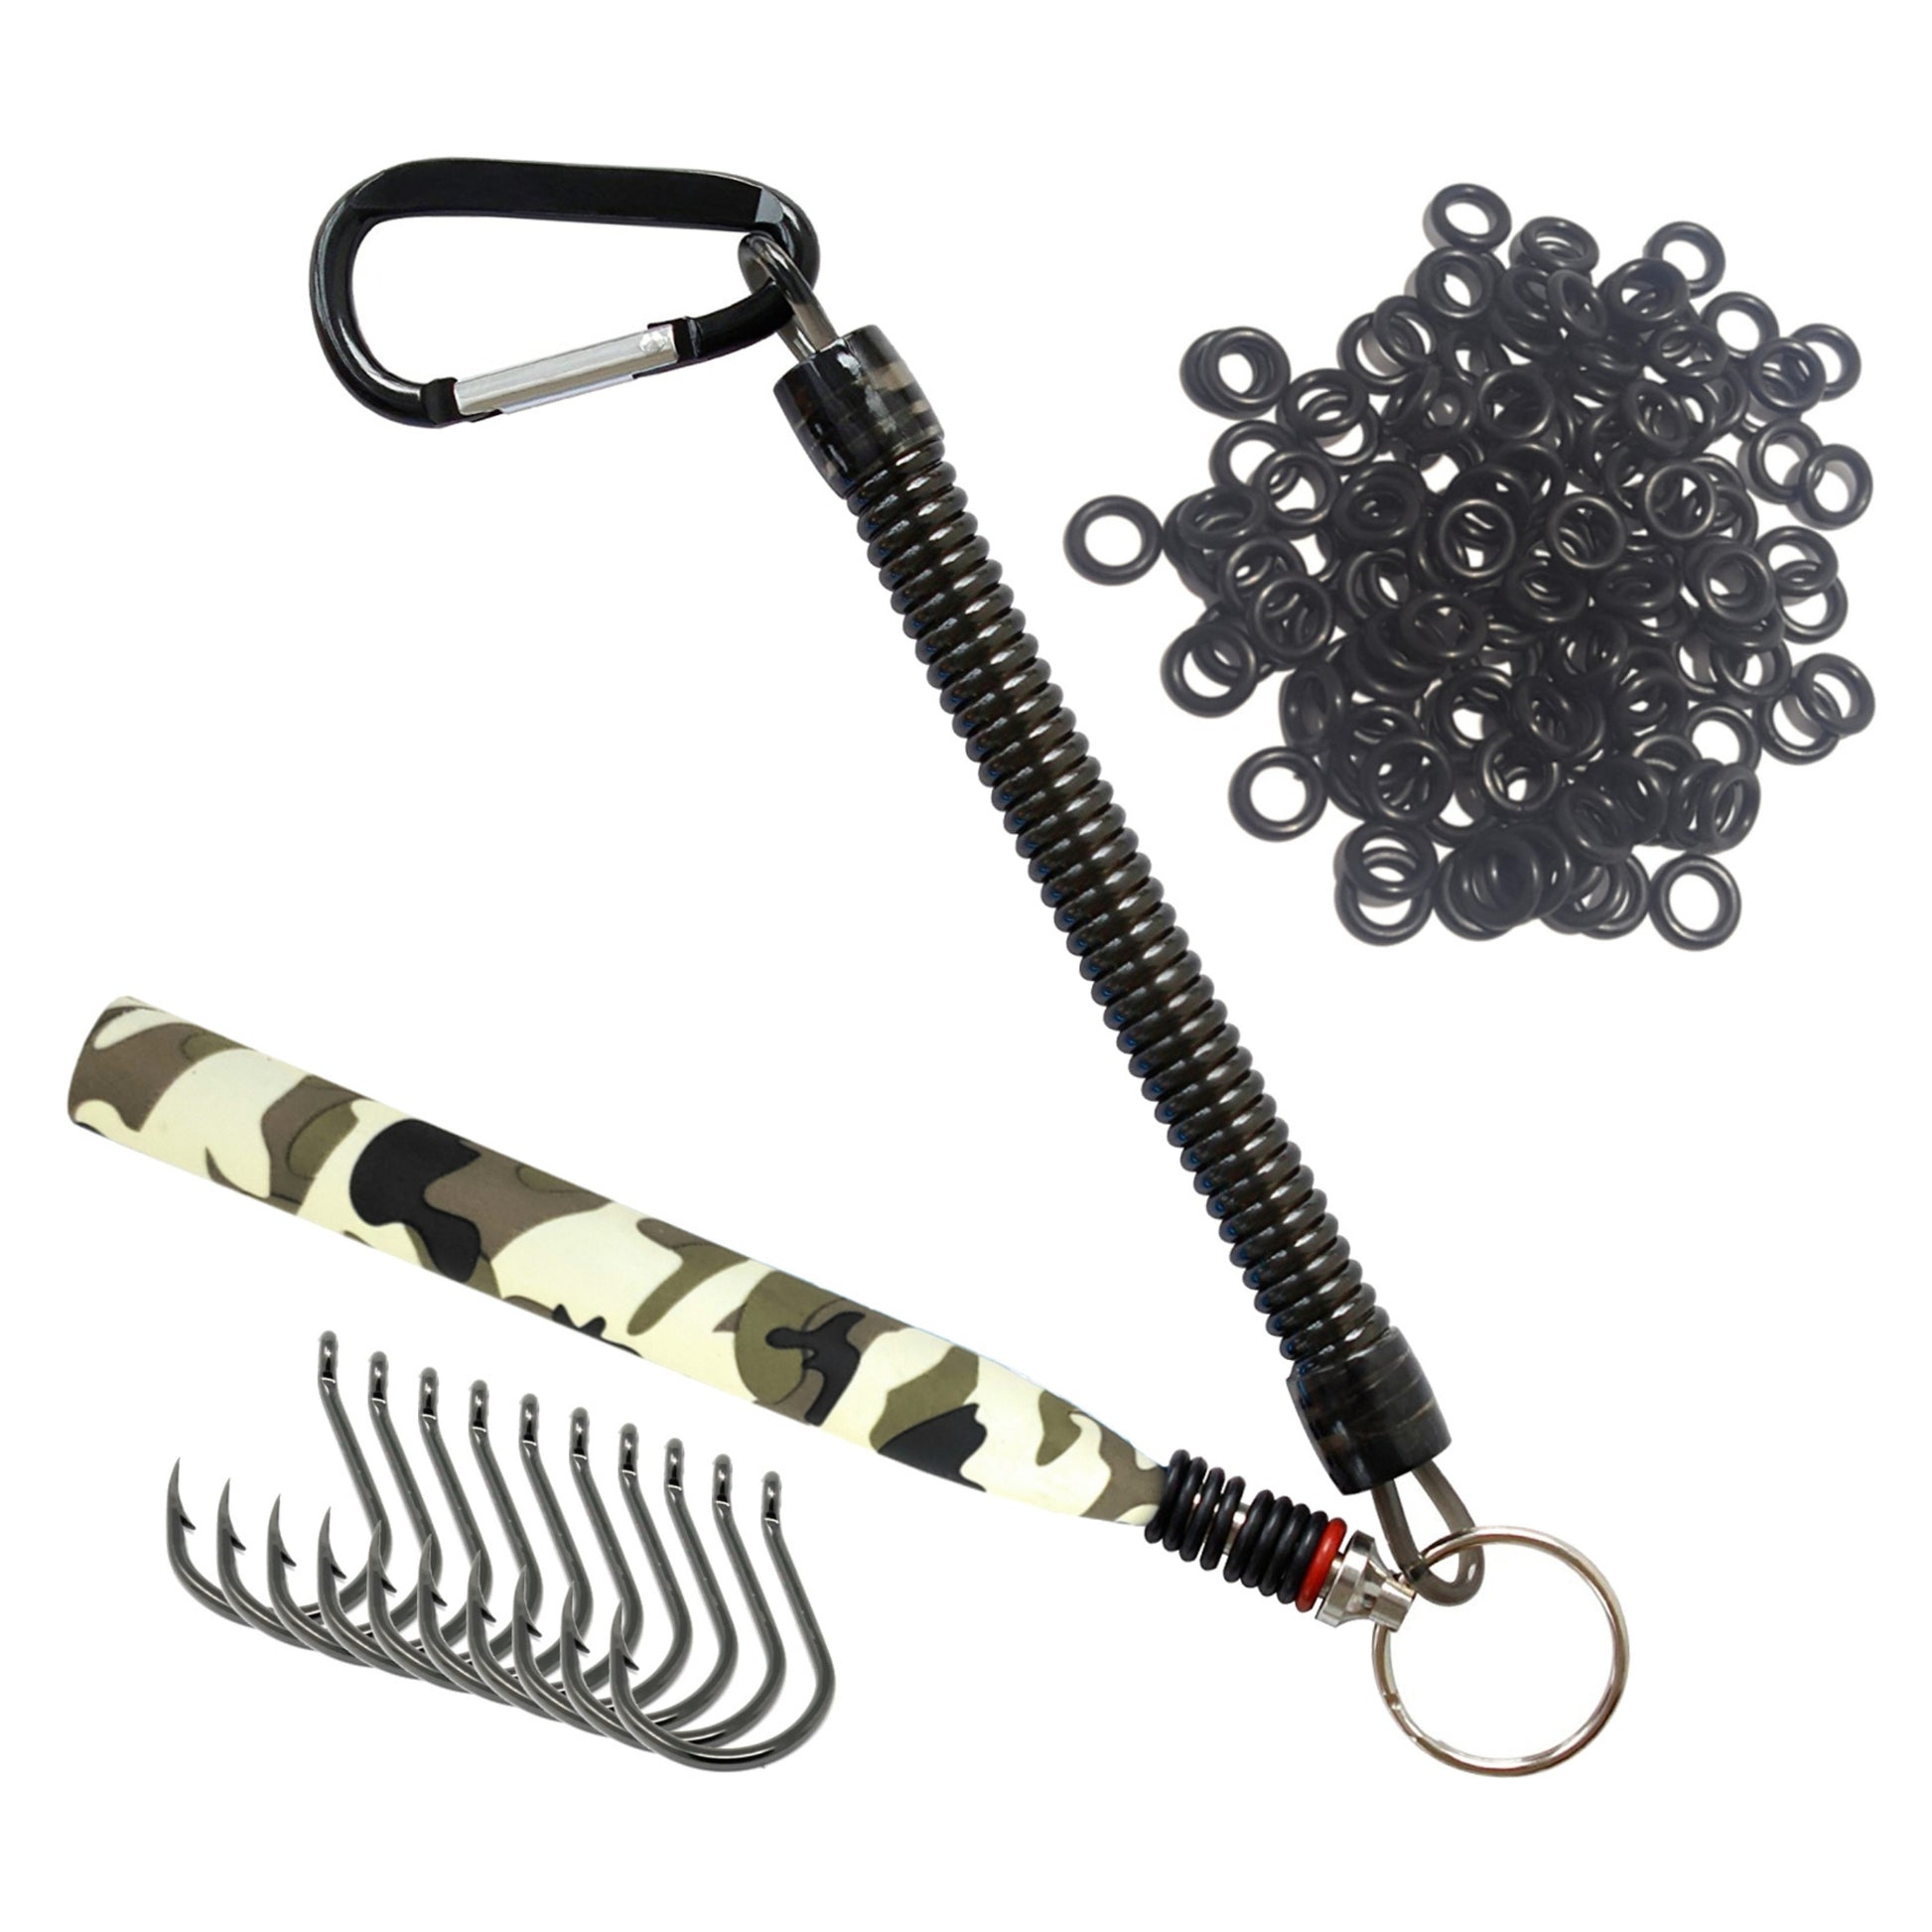 Fishing Rig Tools Kit Aluminium Alloy Wacky Worm With O Rubber Ring for  Senko Stick Soft Baits Fishing Gadget